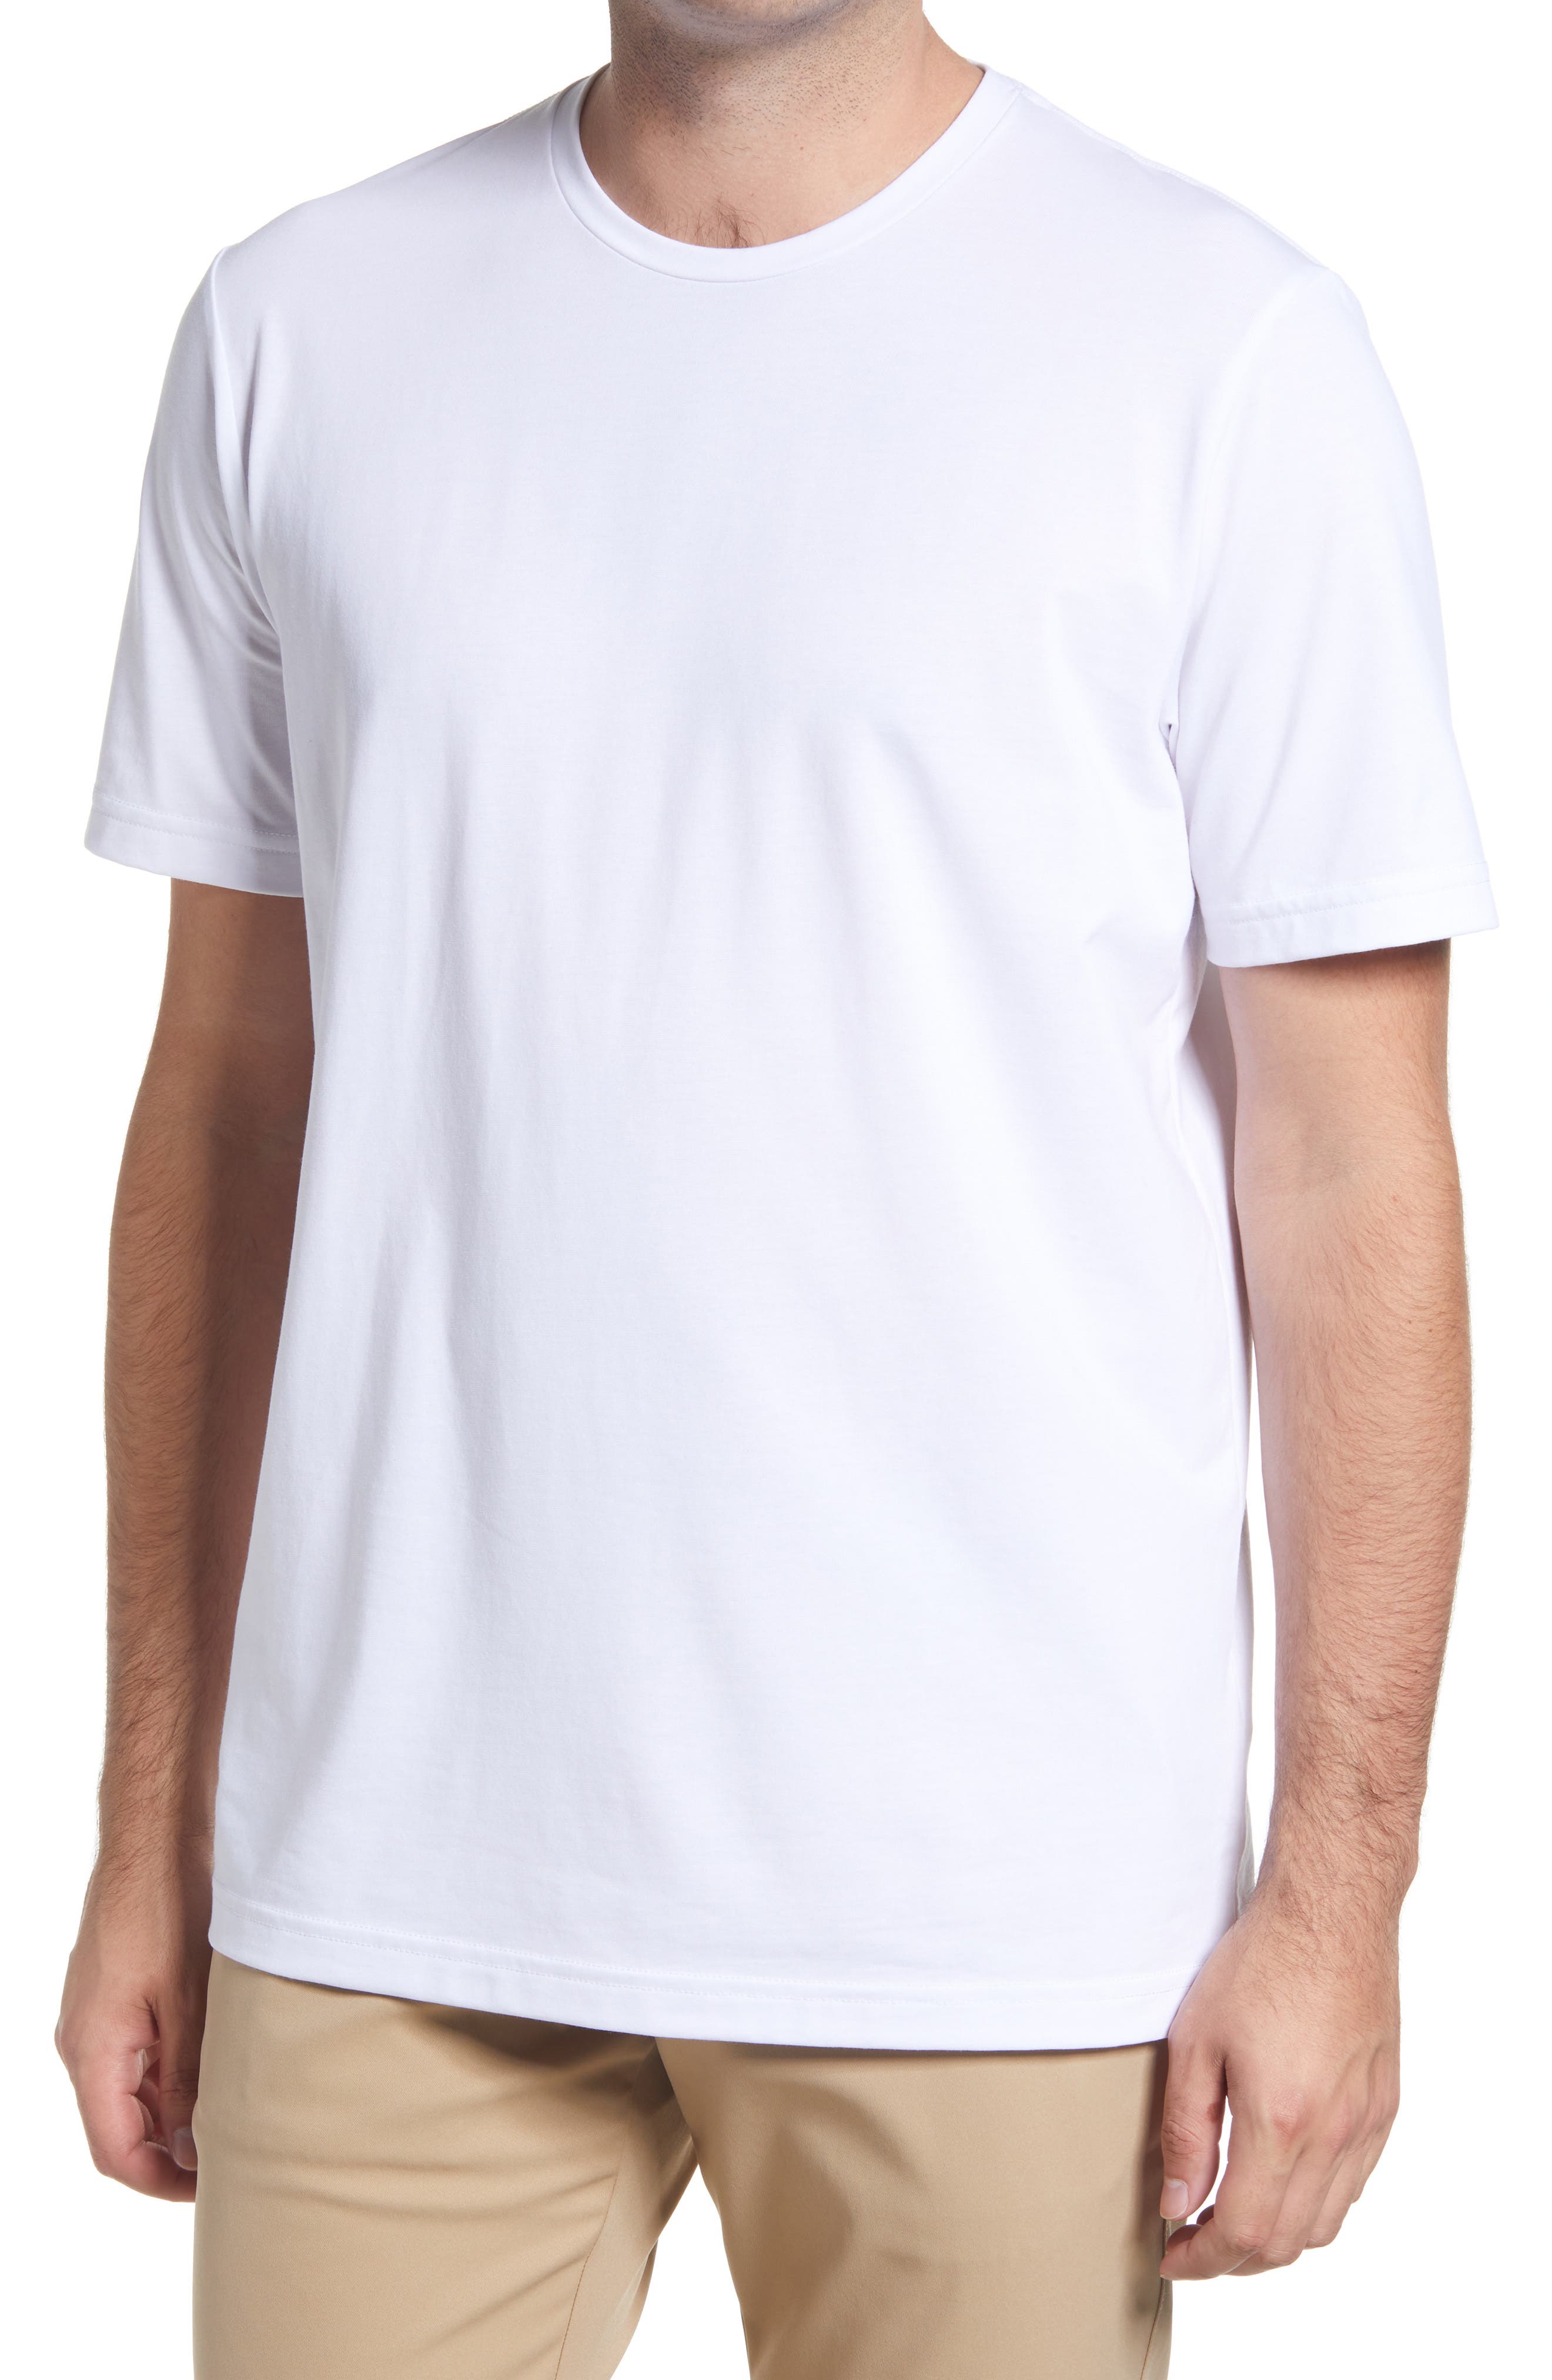 LEVI'S  MEN'S T-Shirt All Sizes ORANGE SNAKE Graphic TEE S,M,L,XL SHORT SLEEVE 